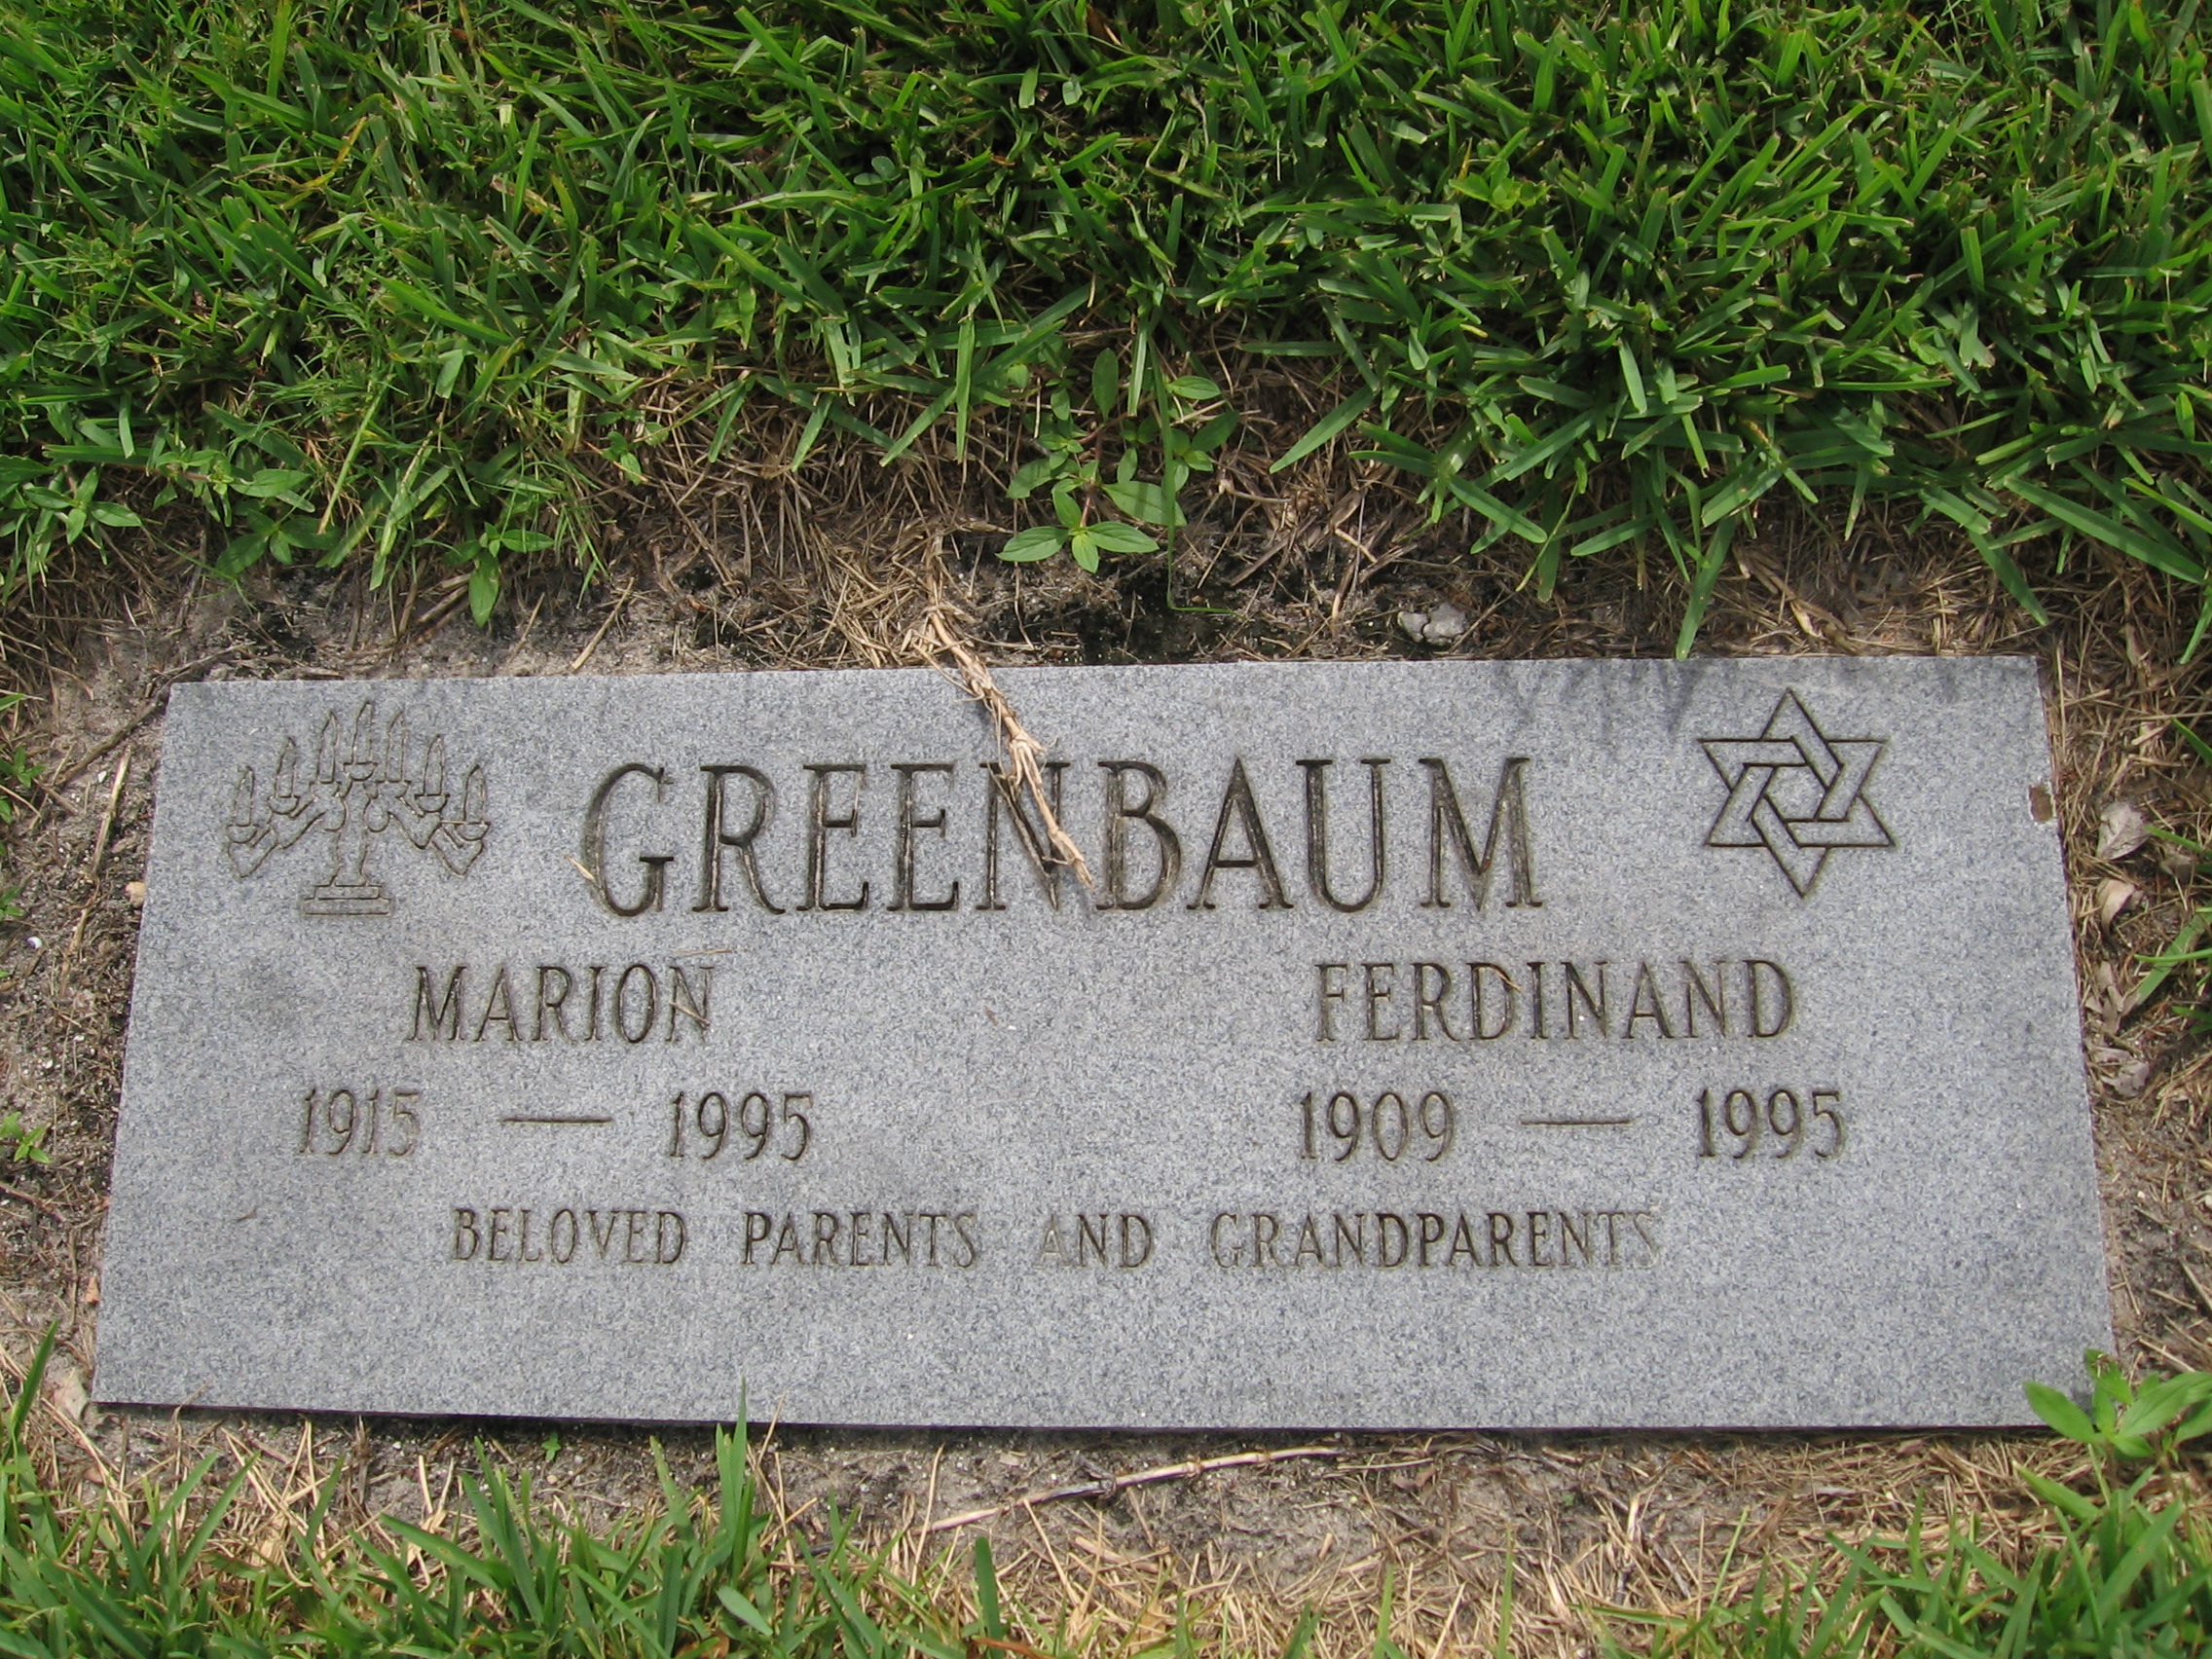 Marion Greenbaum